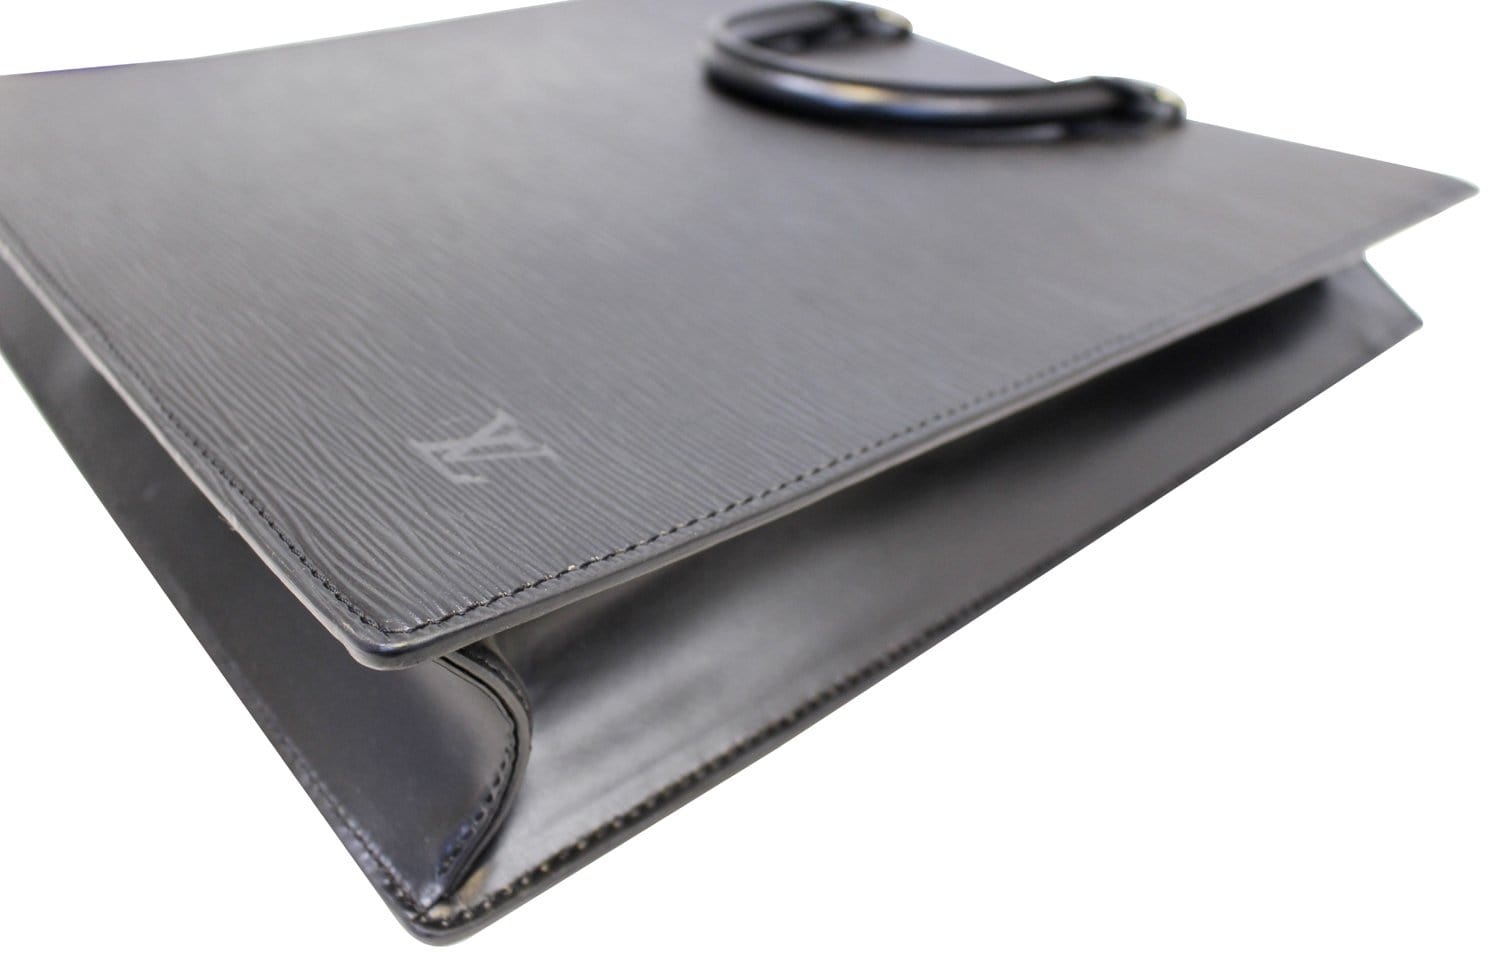 Siopaella Ltd. - We have this black epi leather Louis